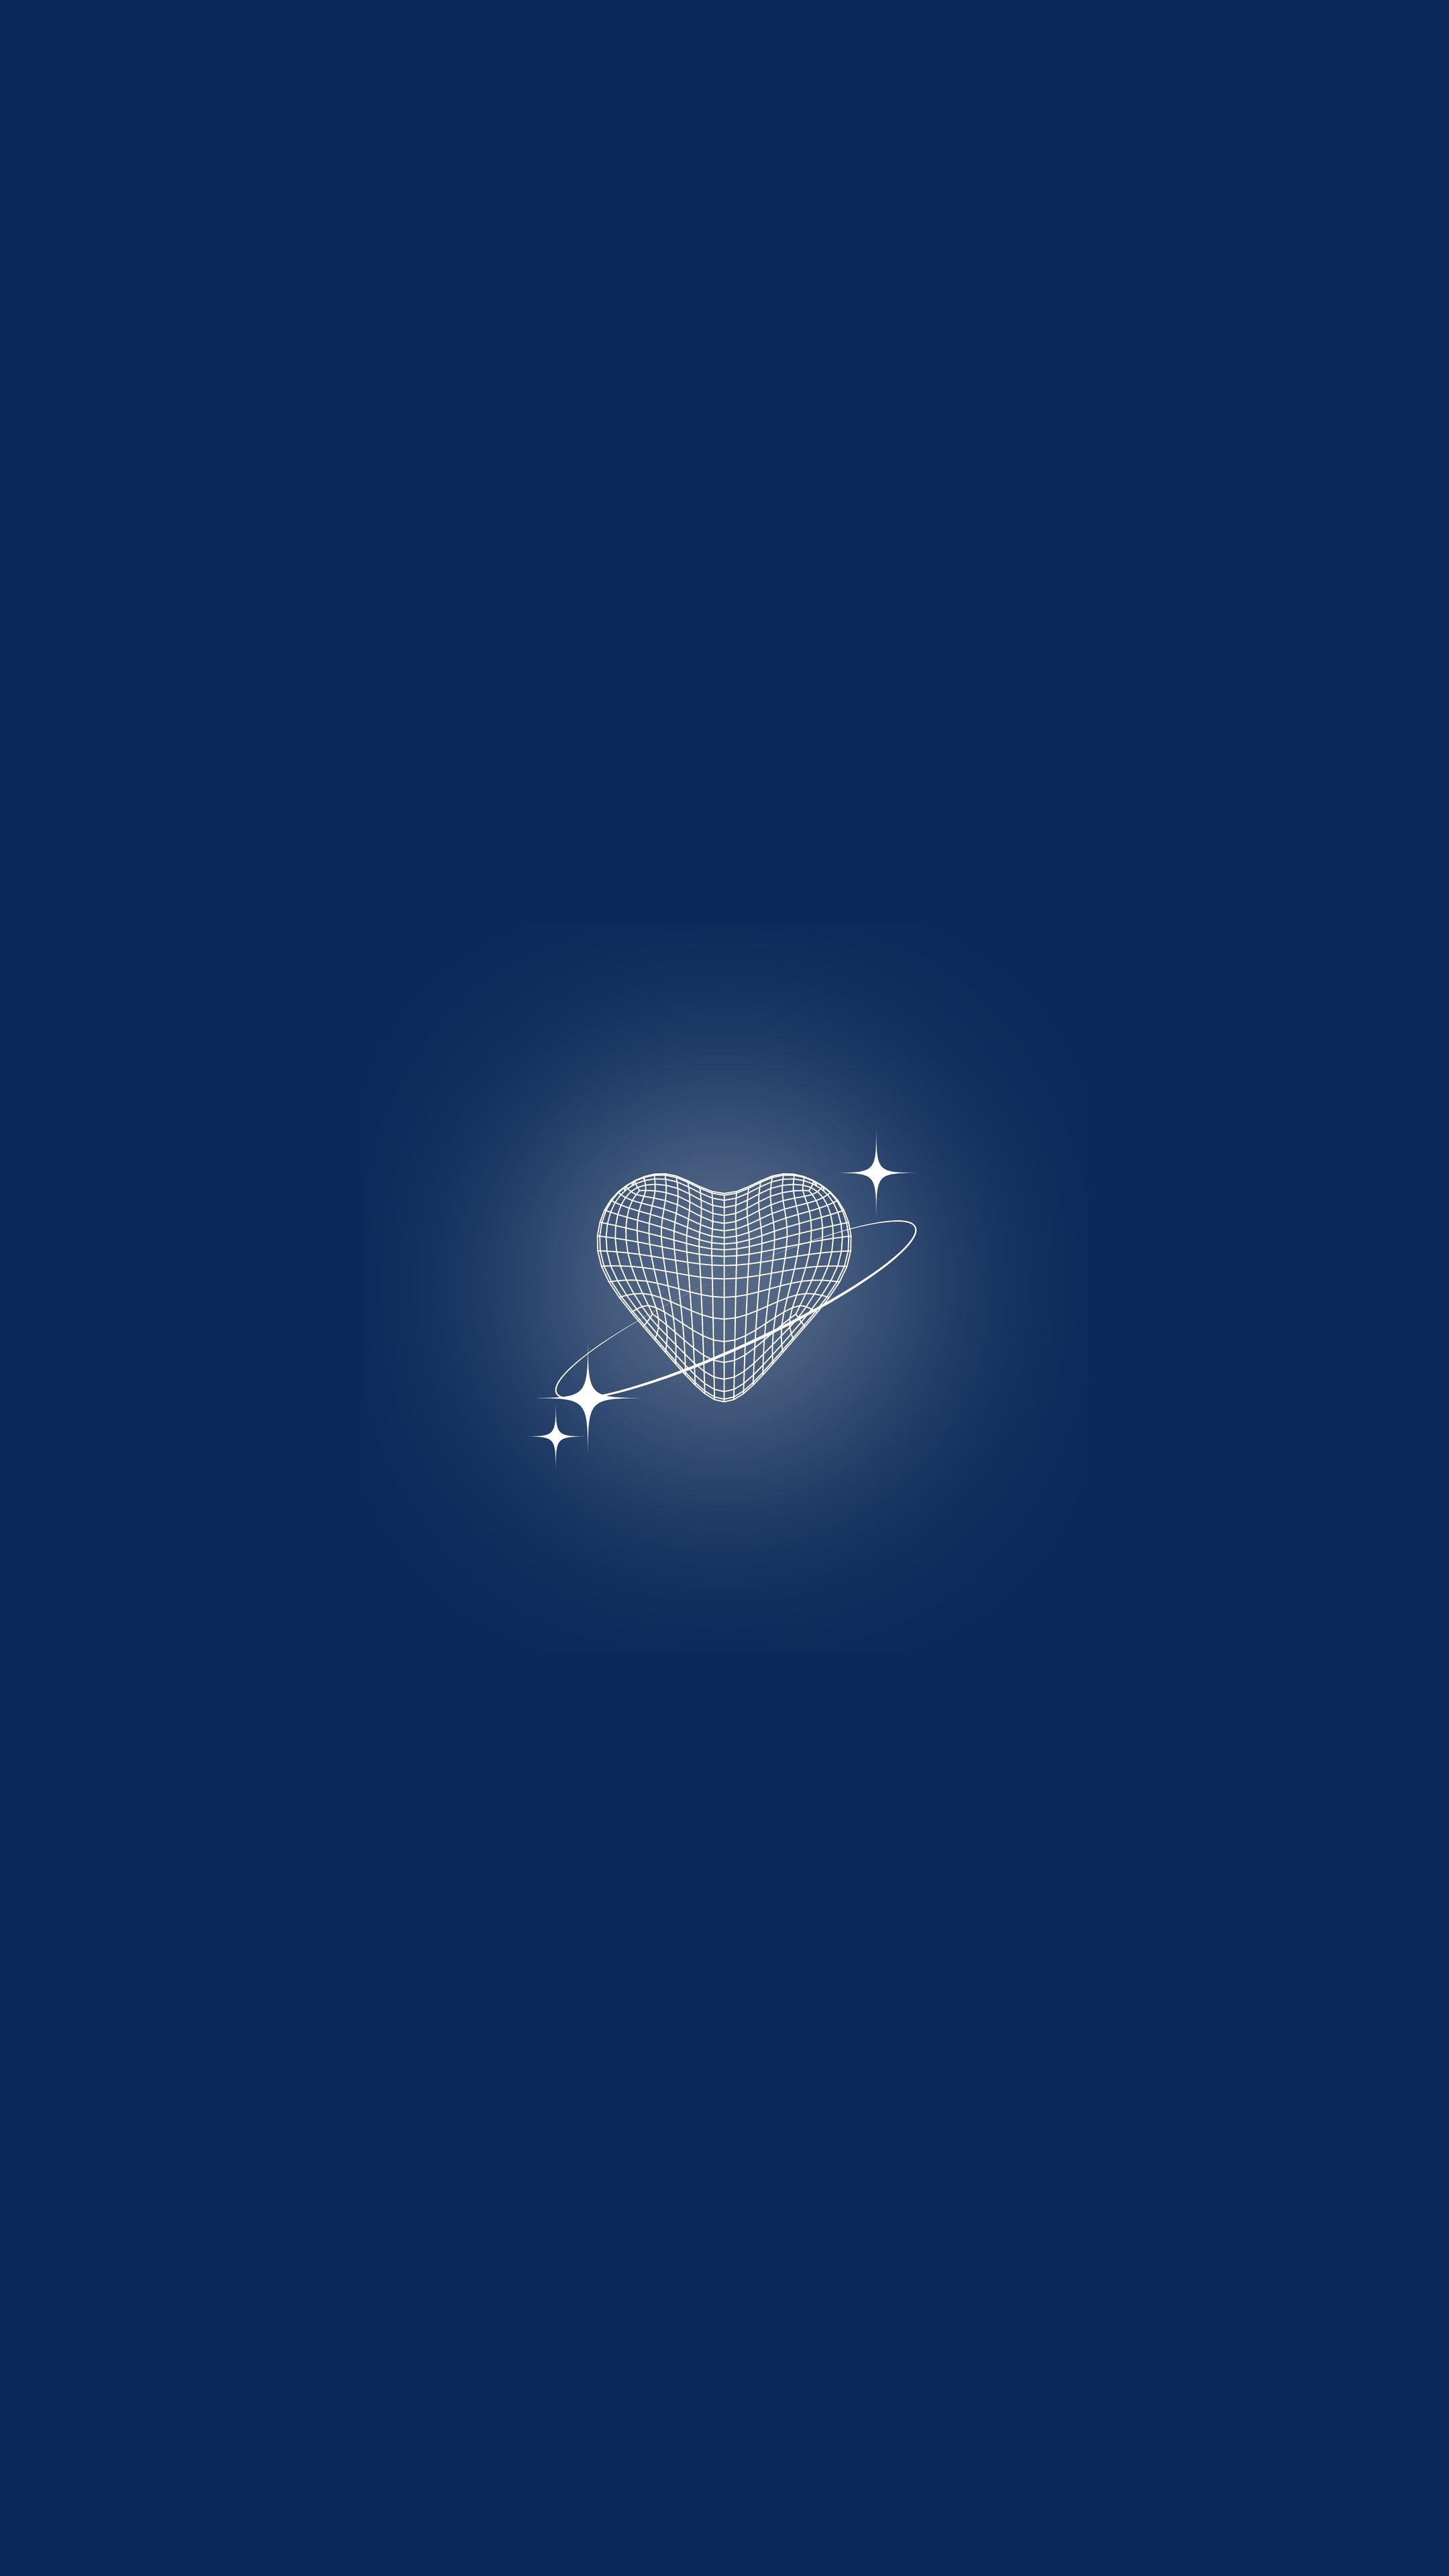 Shining Heart on Dark Blue Background Ფონი[c656dc8c75984ca4b8d4]